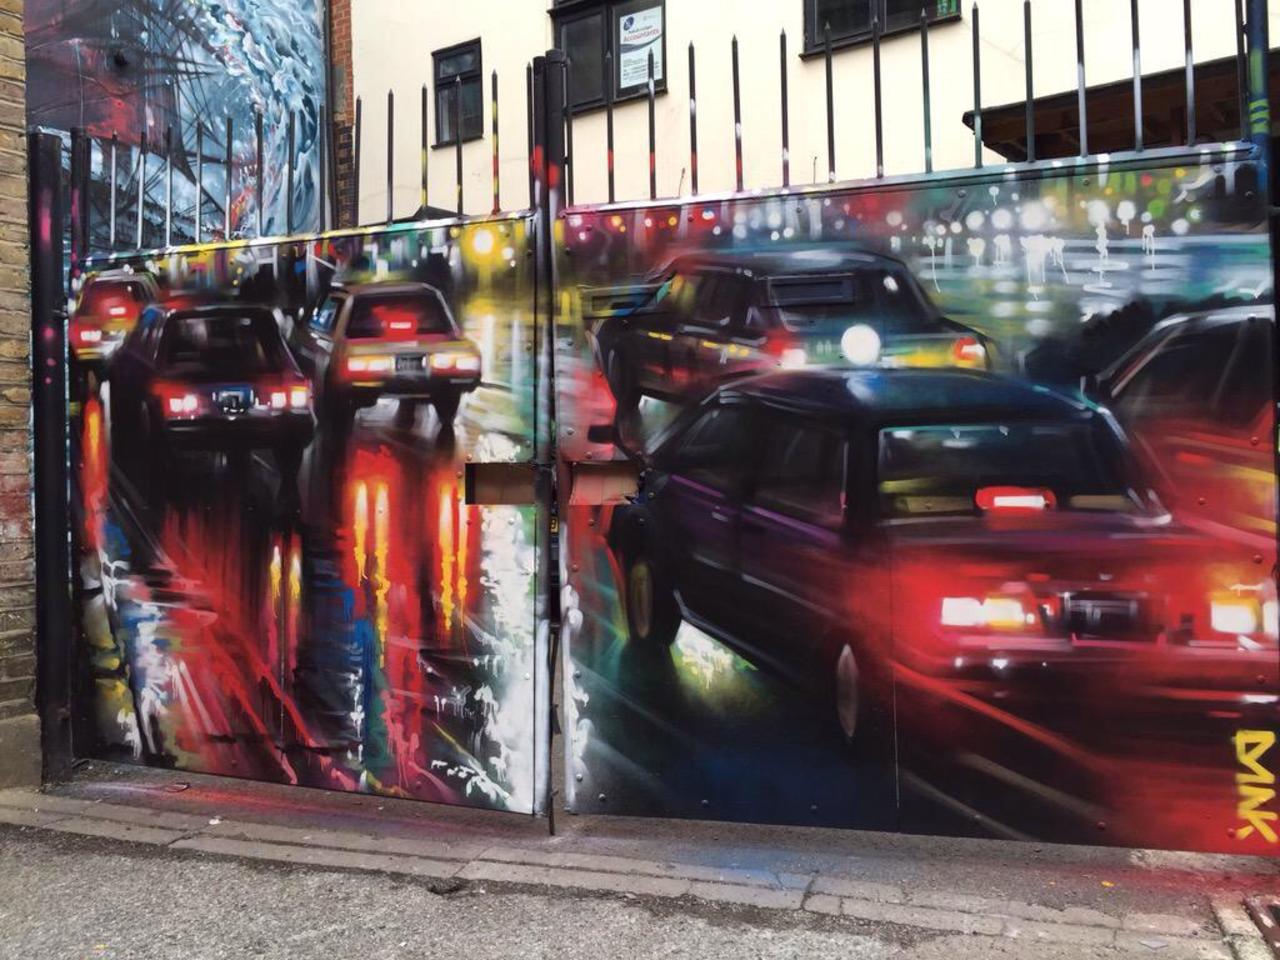 New Street Art by DanKitchener in Brick Lane London 

#art #graffiti #mural #streetart http://t.co/7duu89fXMi